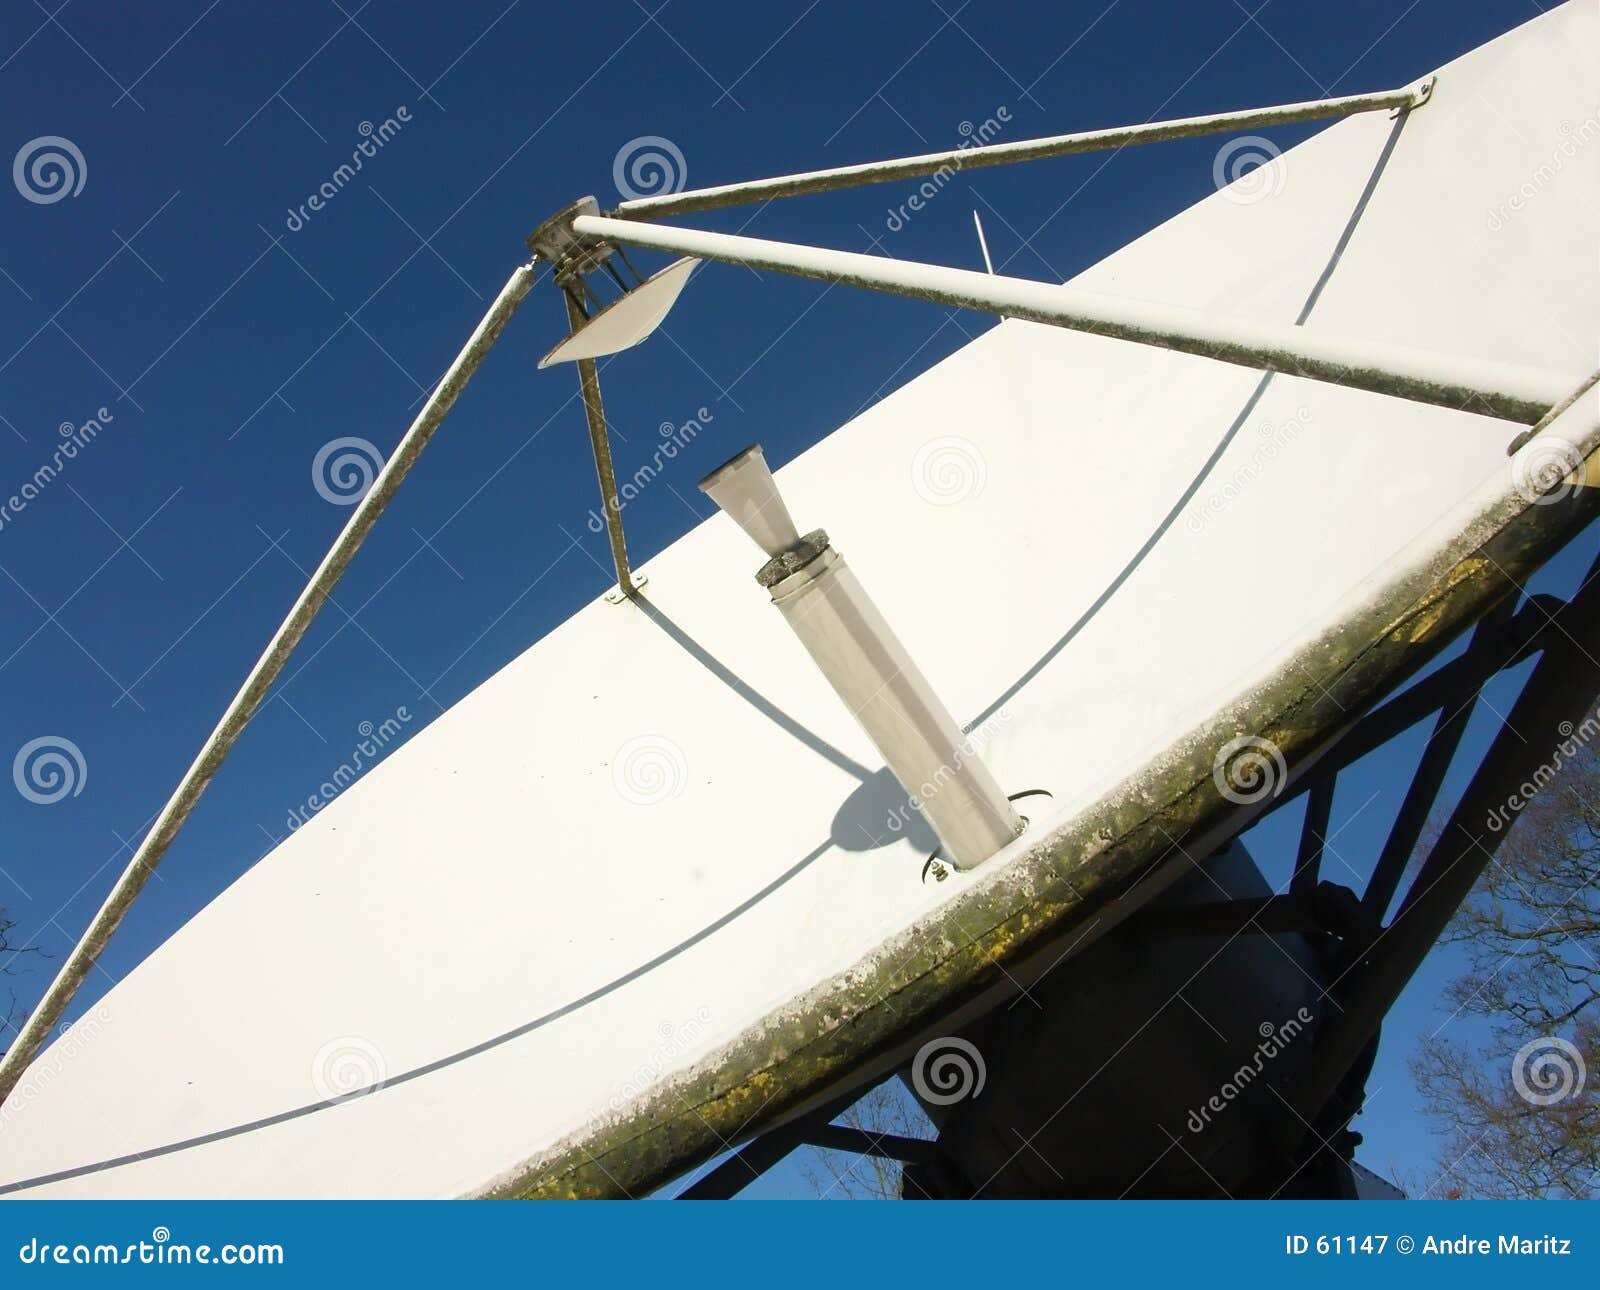 satelite broadcast dish